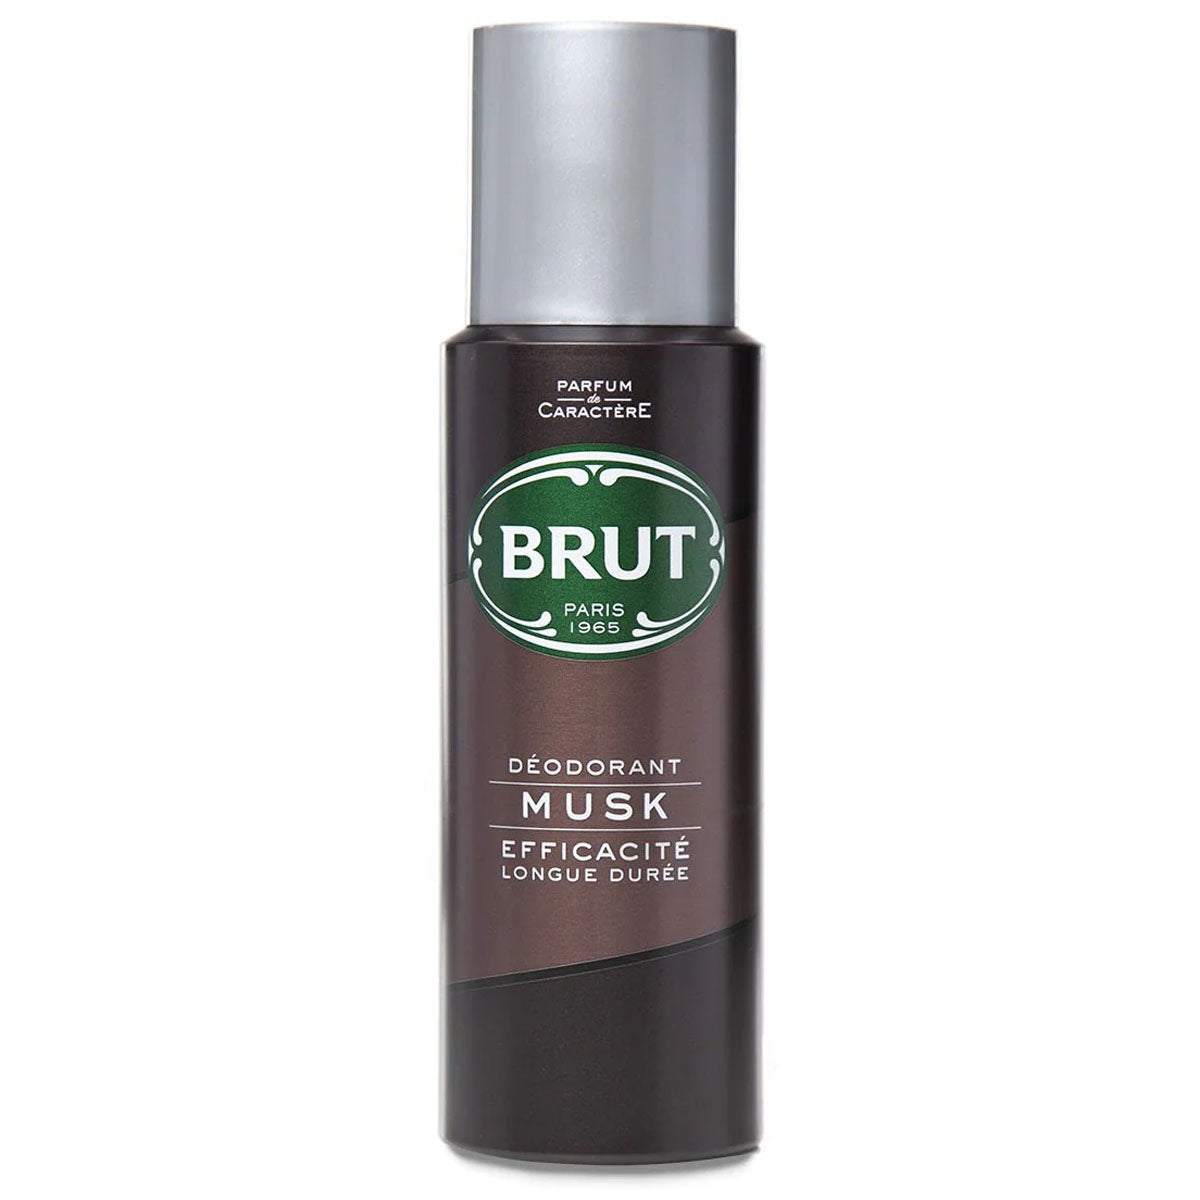 Brut deodorant spray Musk - 200ml on a white background.